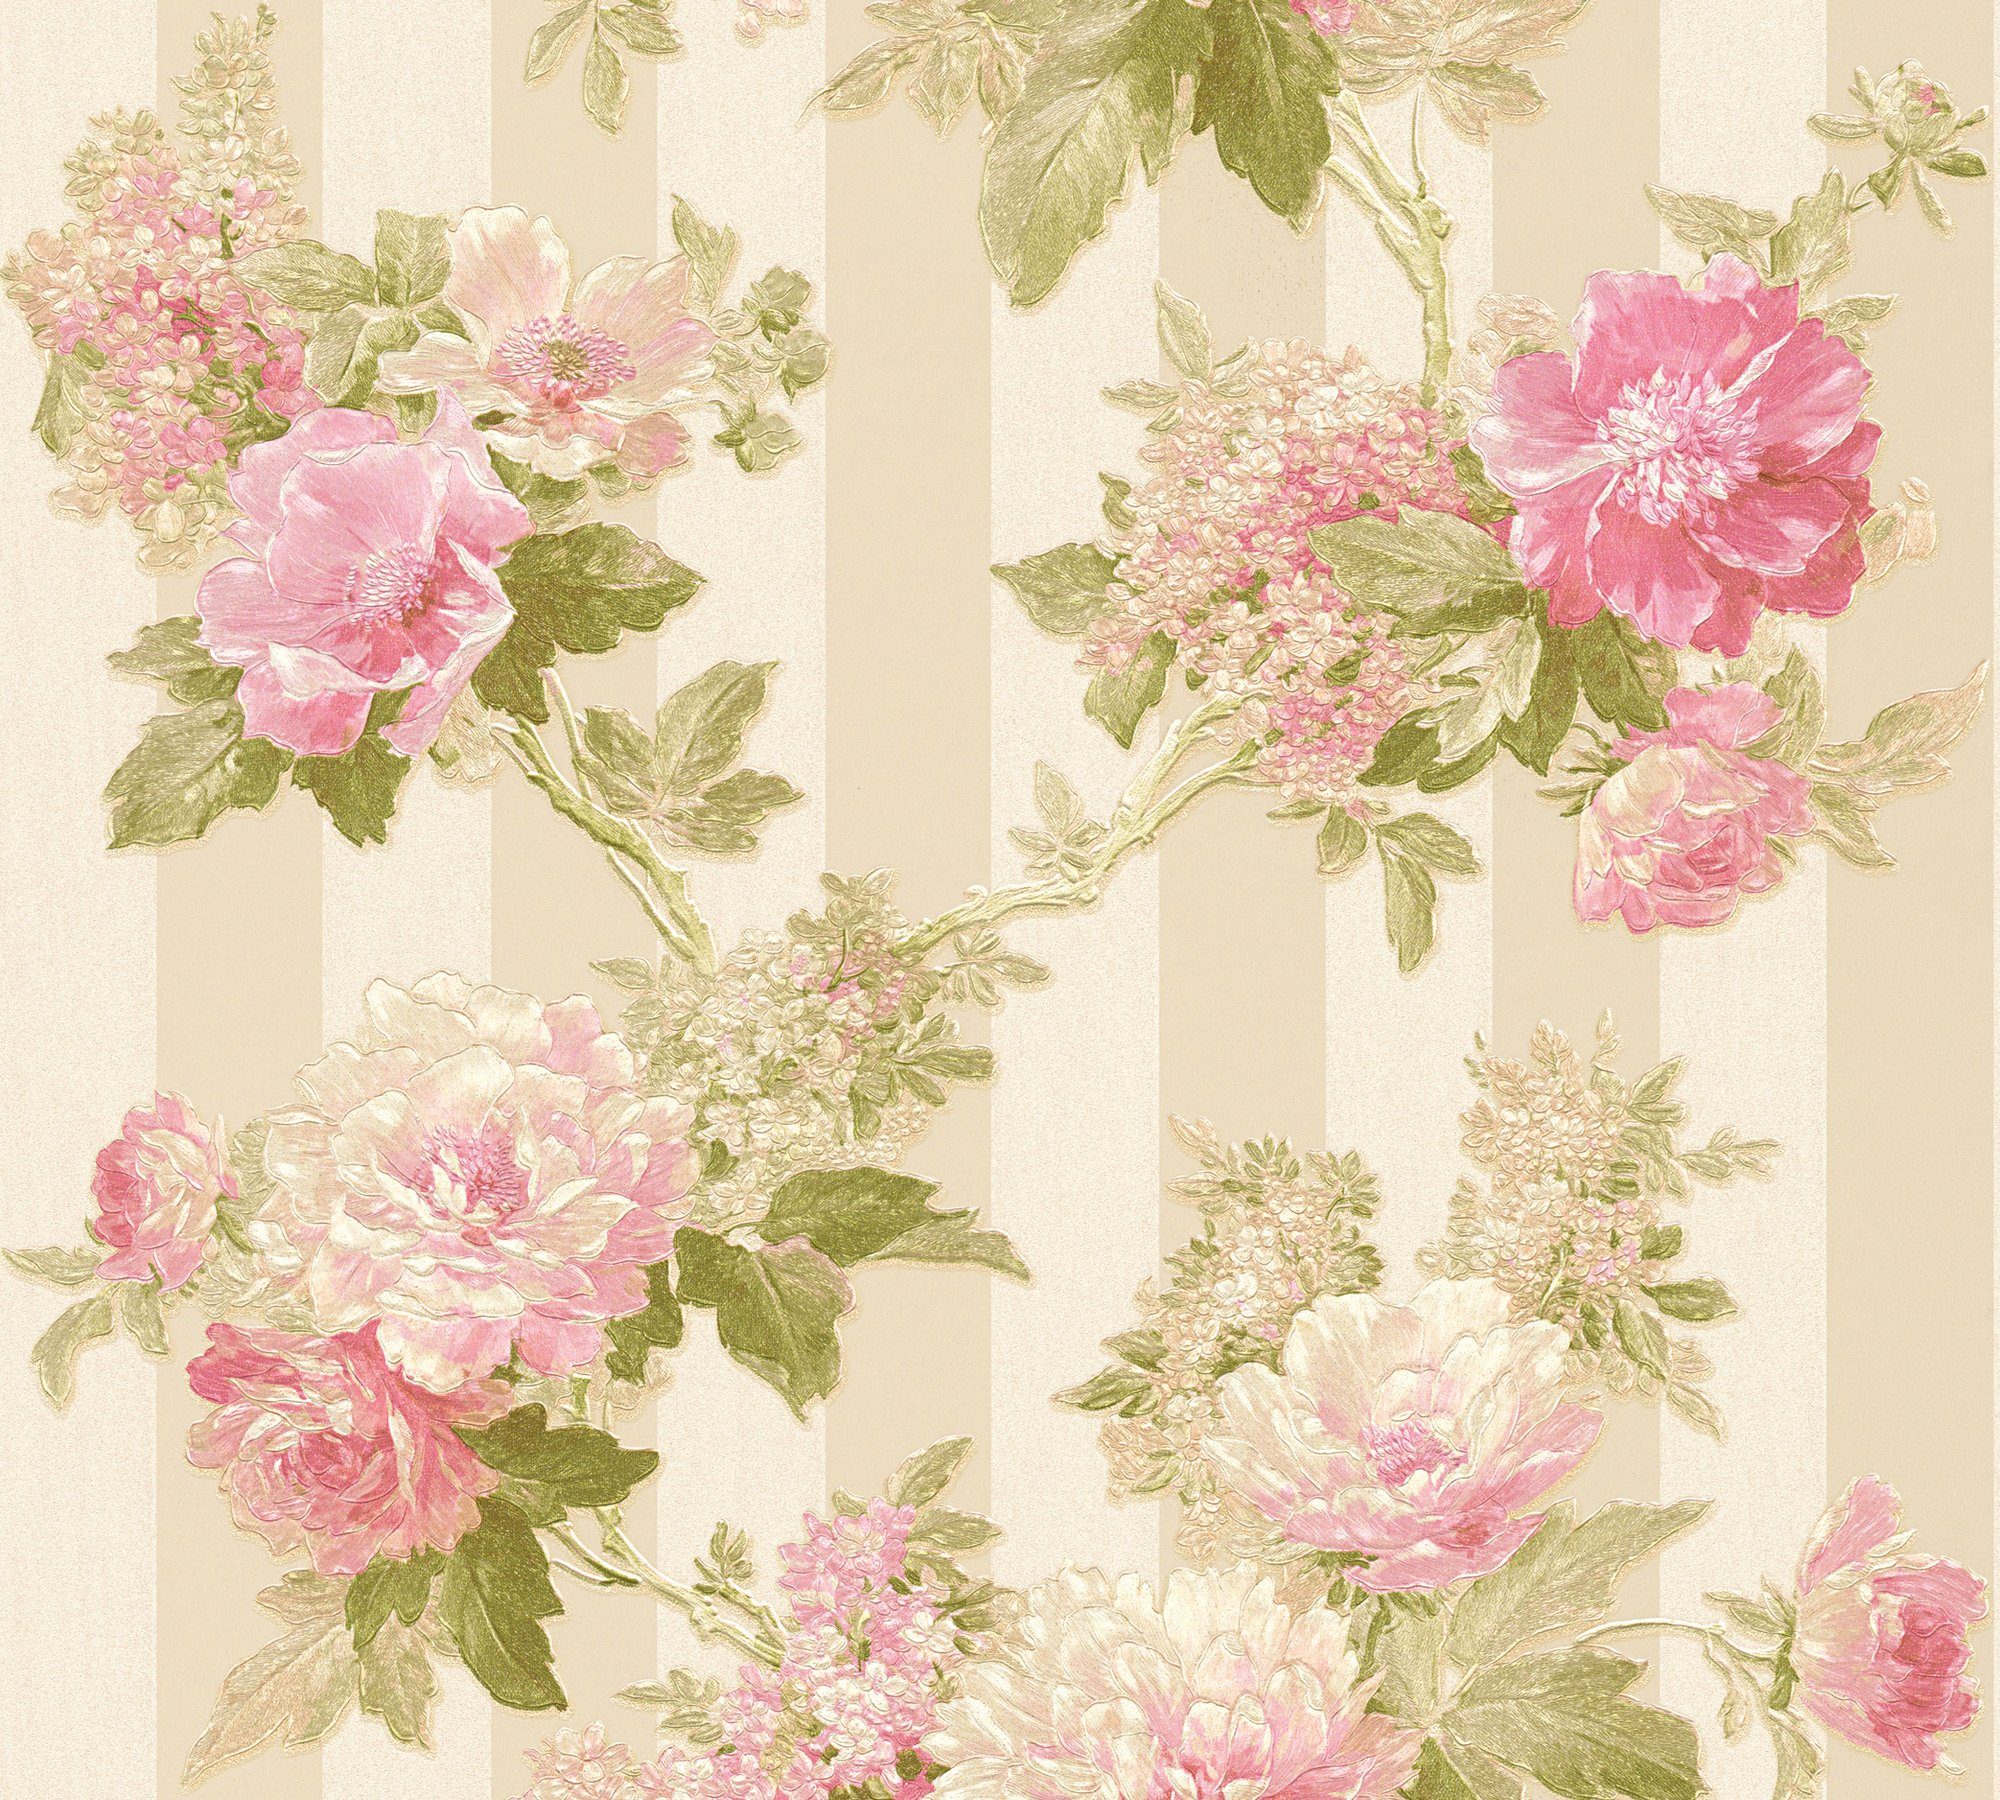 romantisch Tapete floral, Blumen Streifentapete Romantico bunt/creme Création floral, Vliestapete A.S.